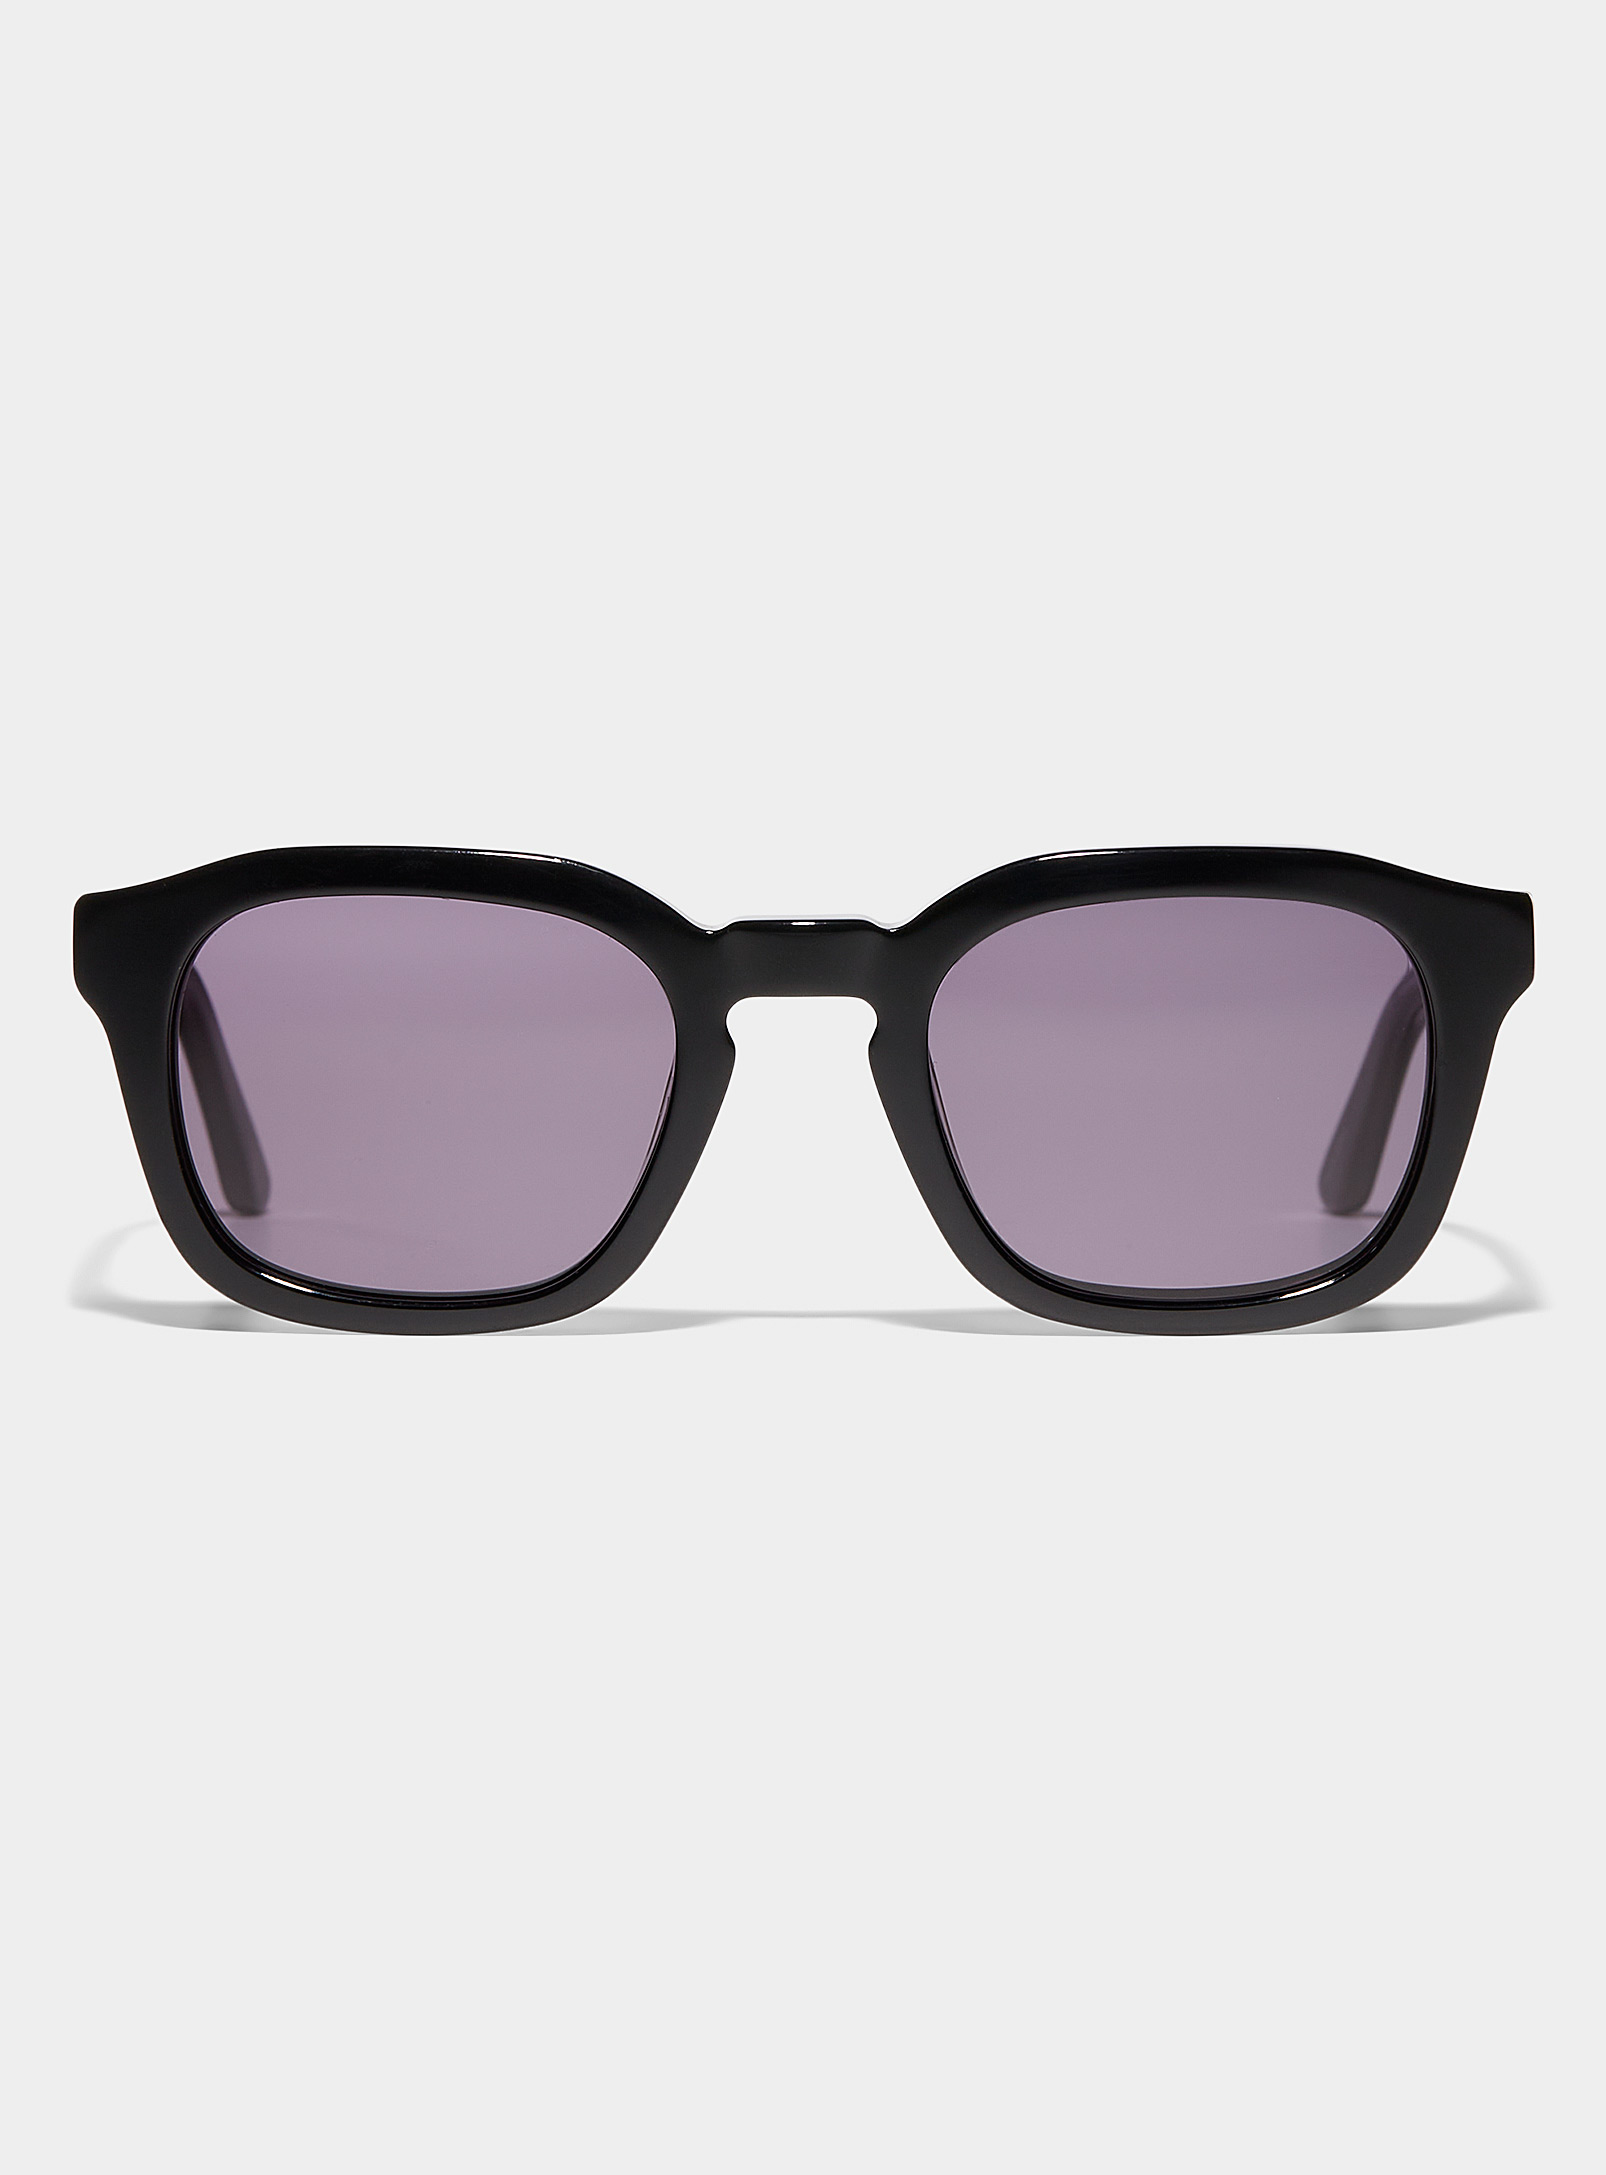 French Kiwis Oscar Square Sunglasses In Black